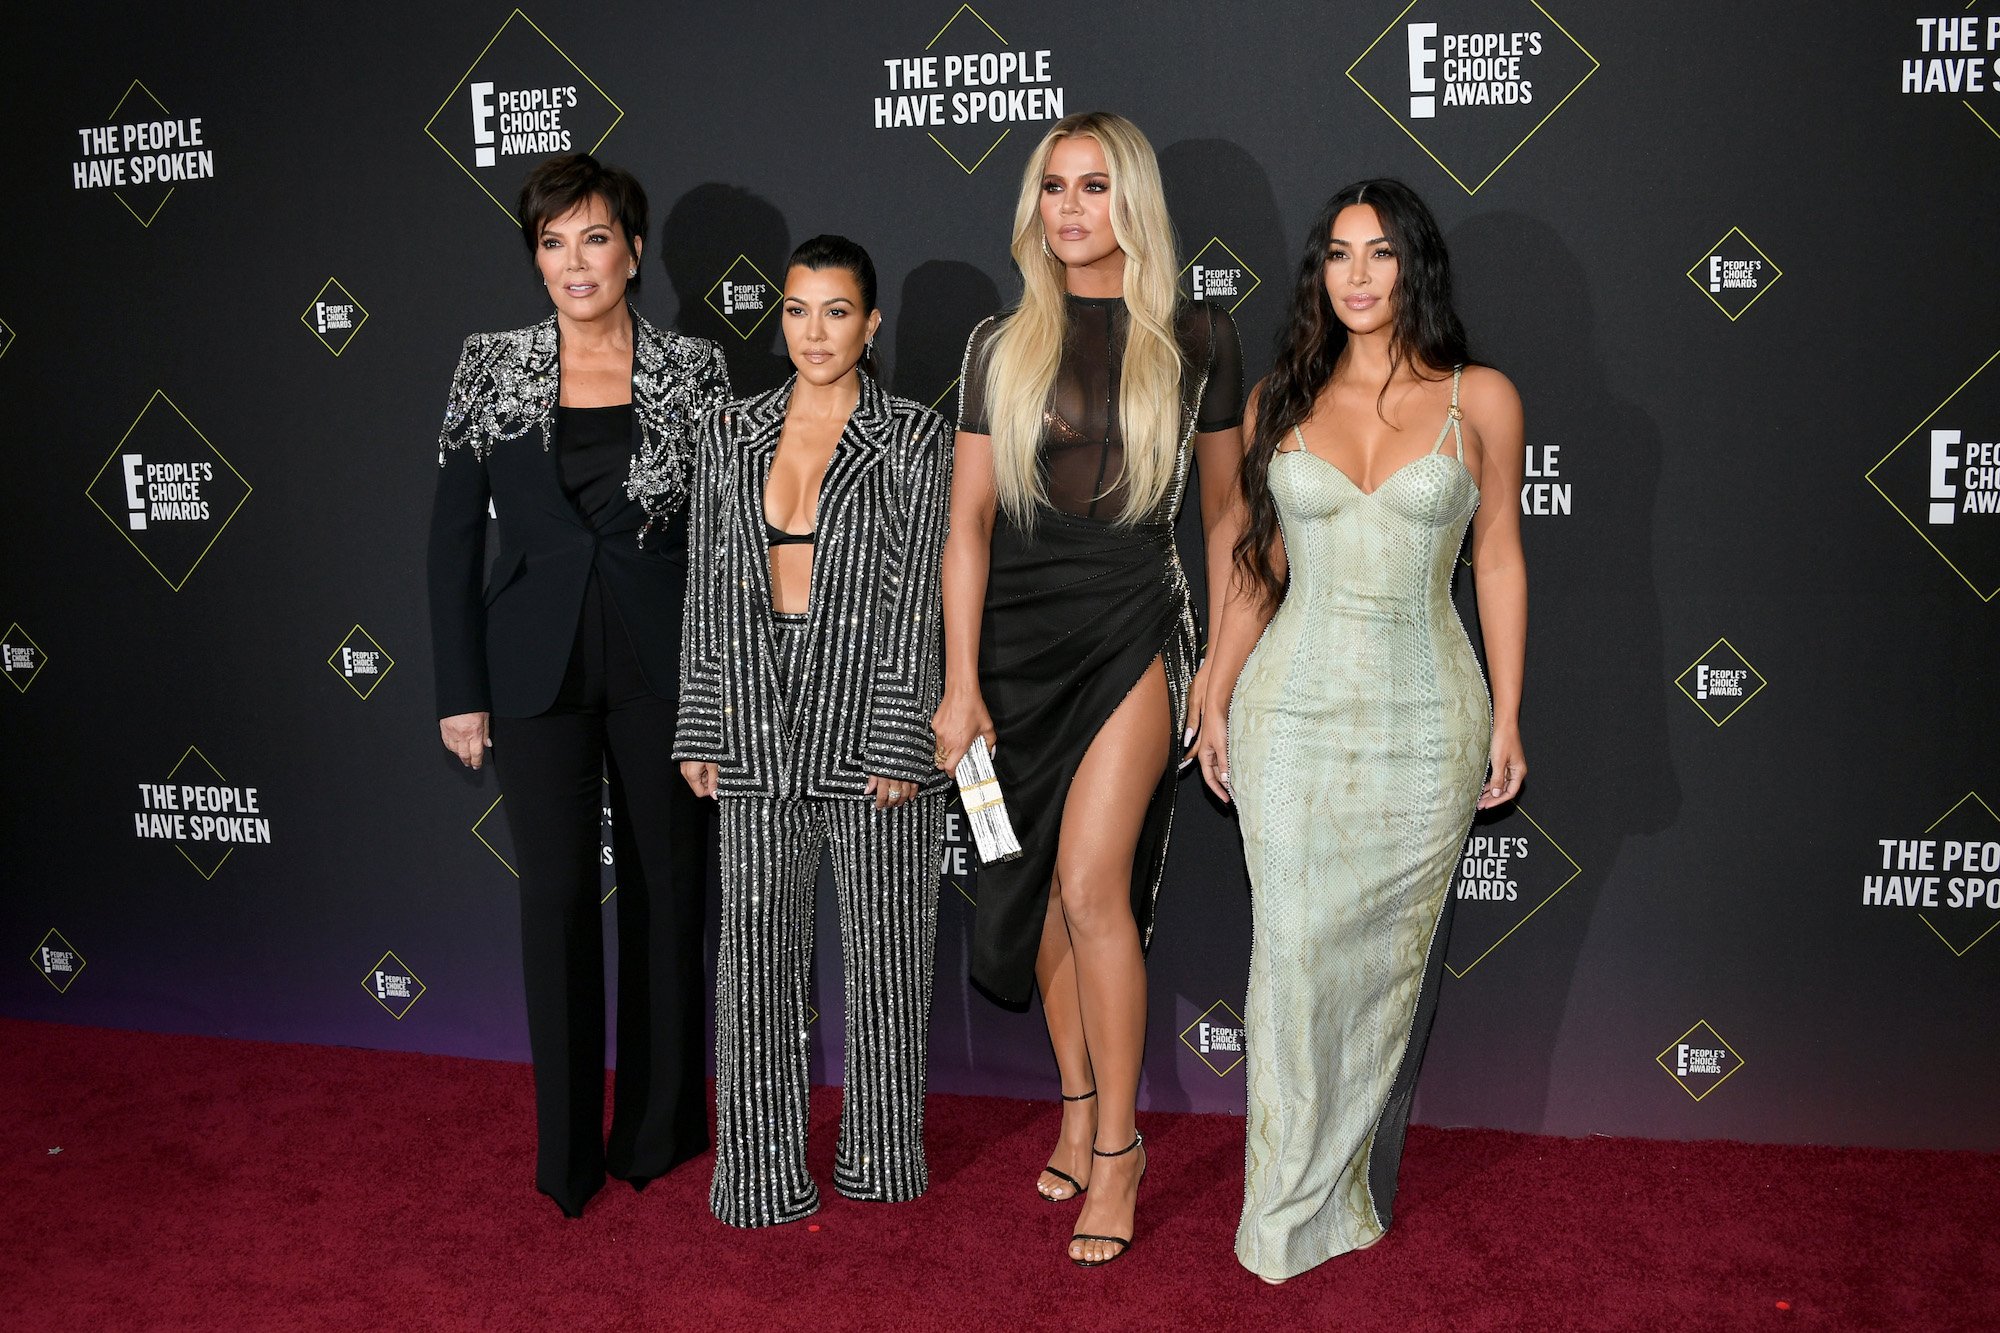 The Kardashian-Jenners